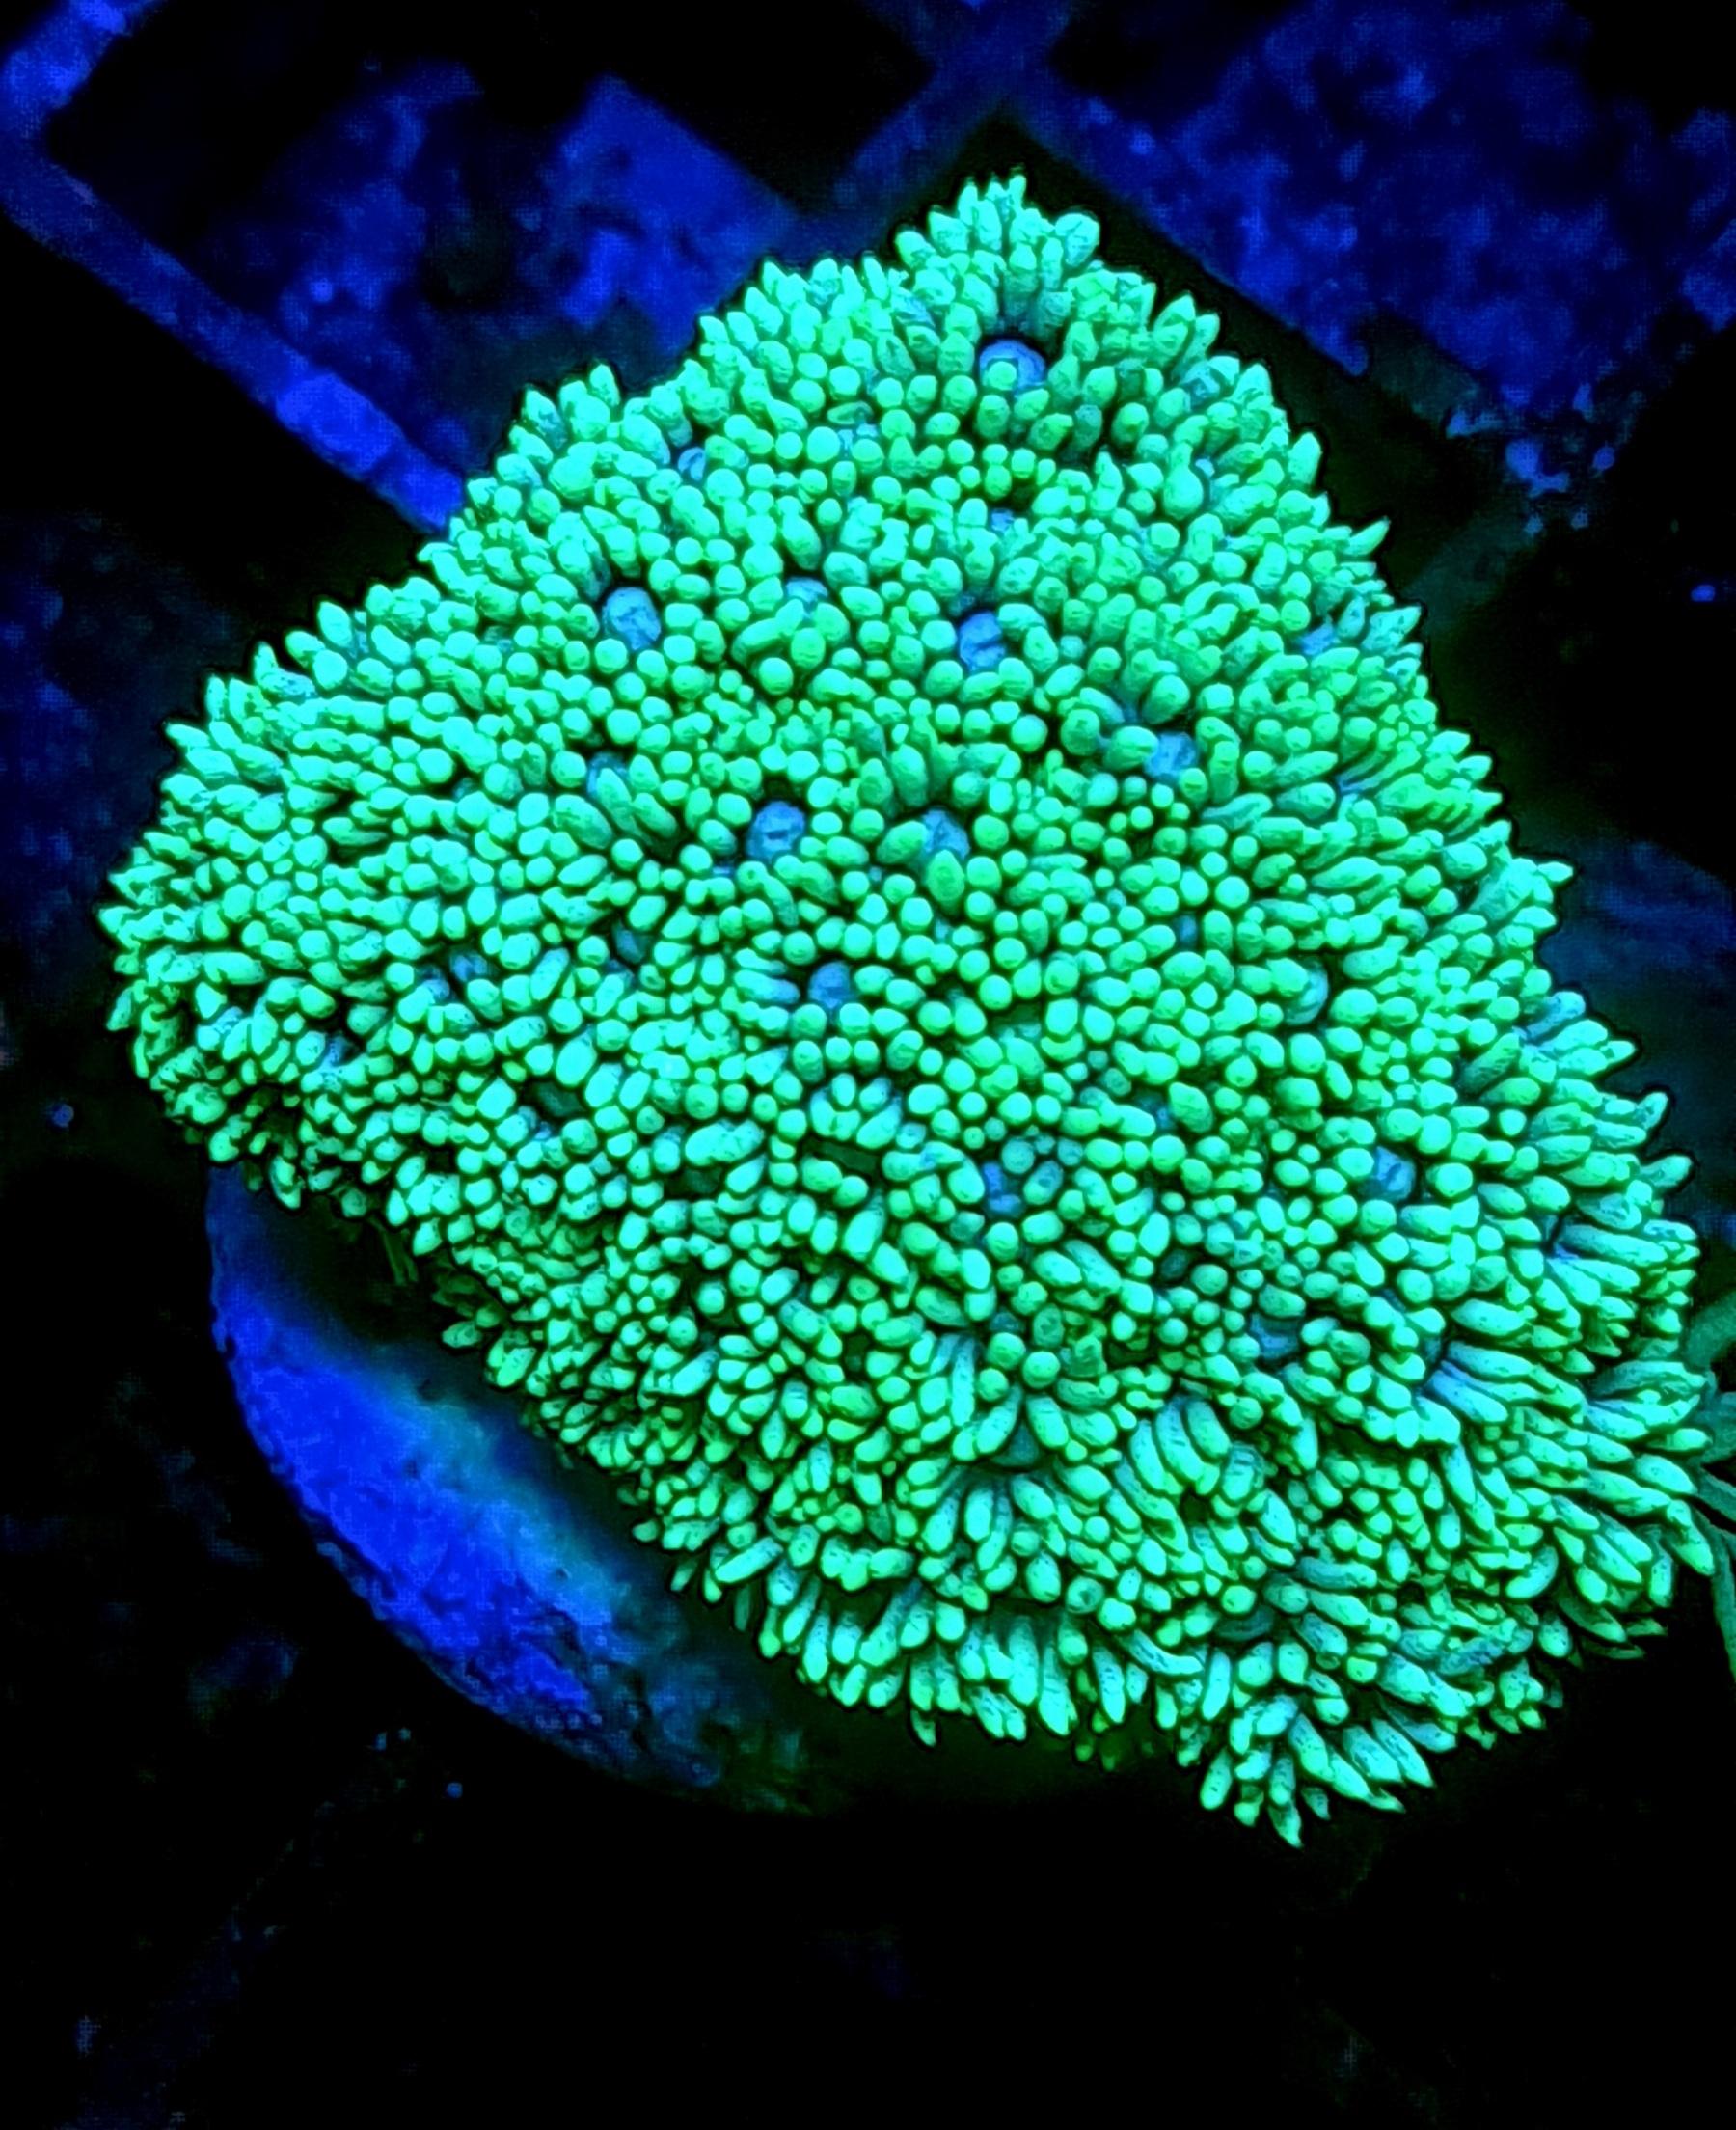 Green Goniopora marine coral